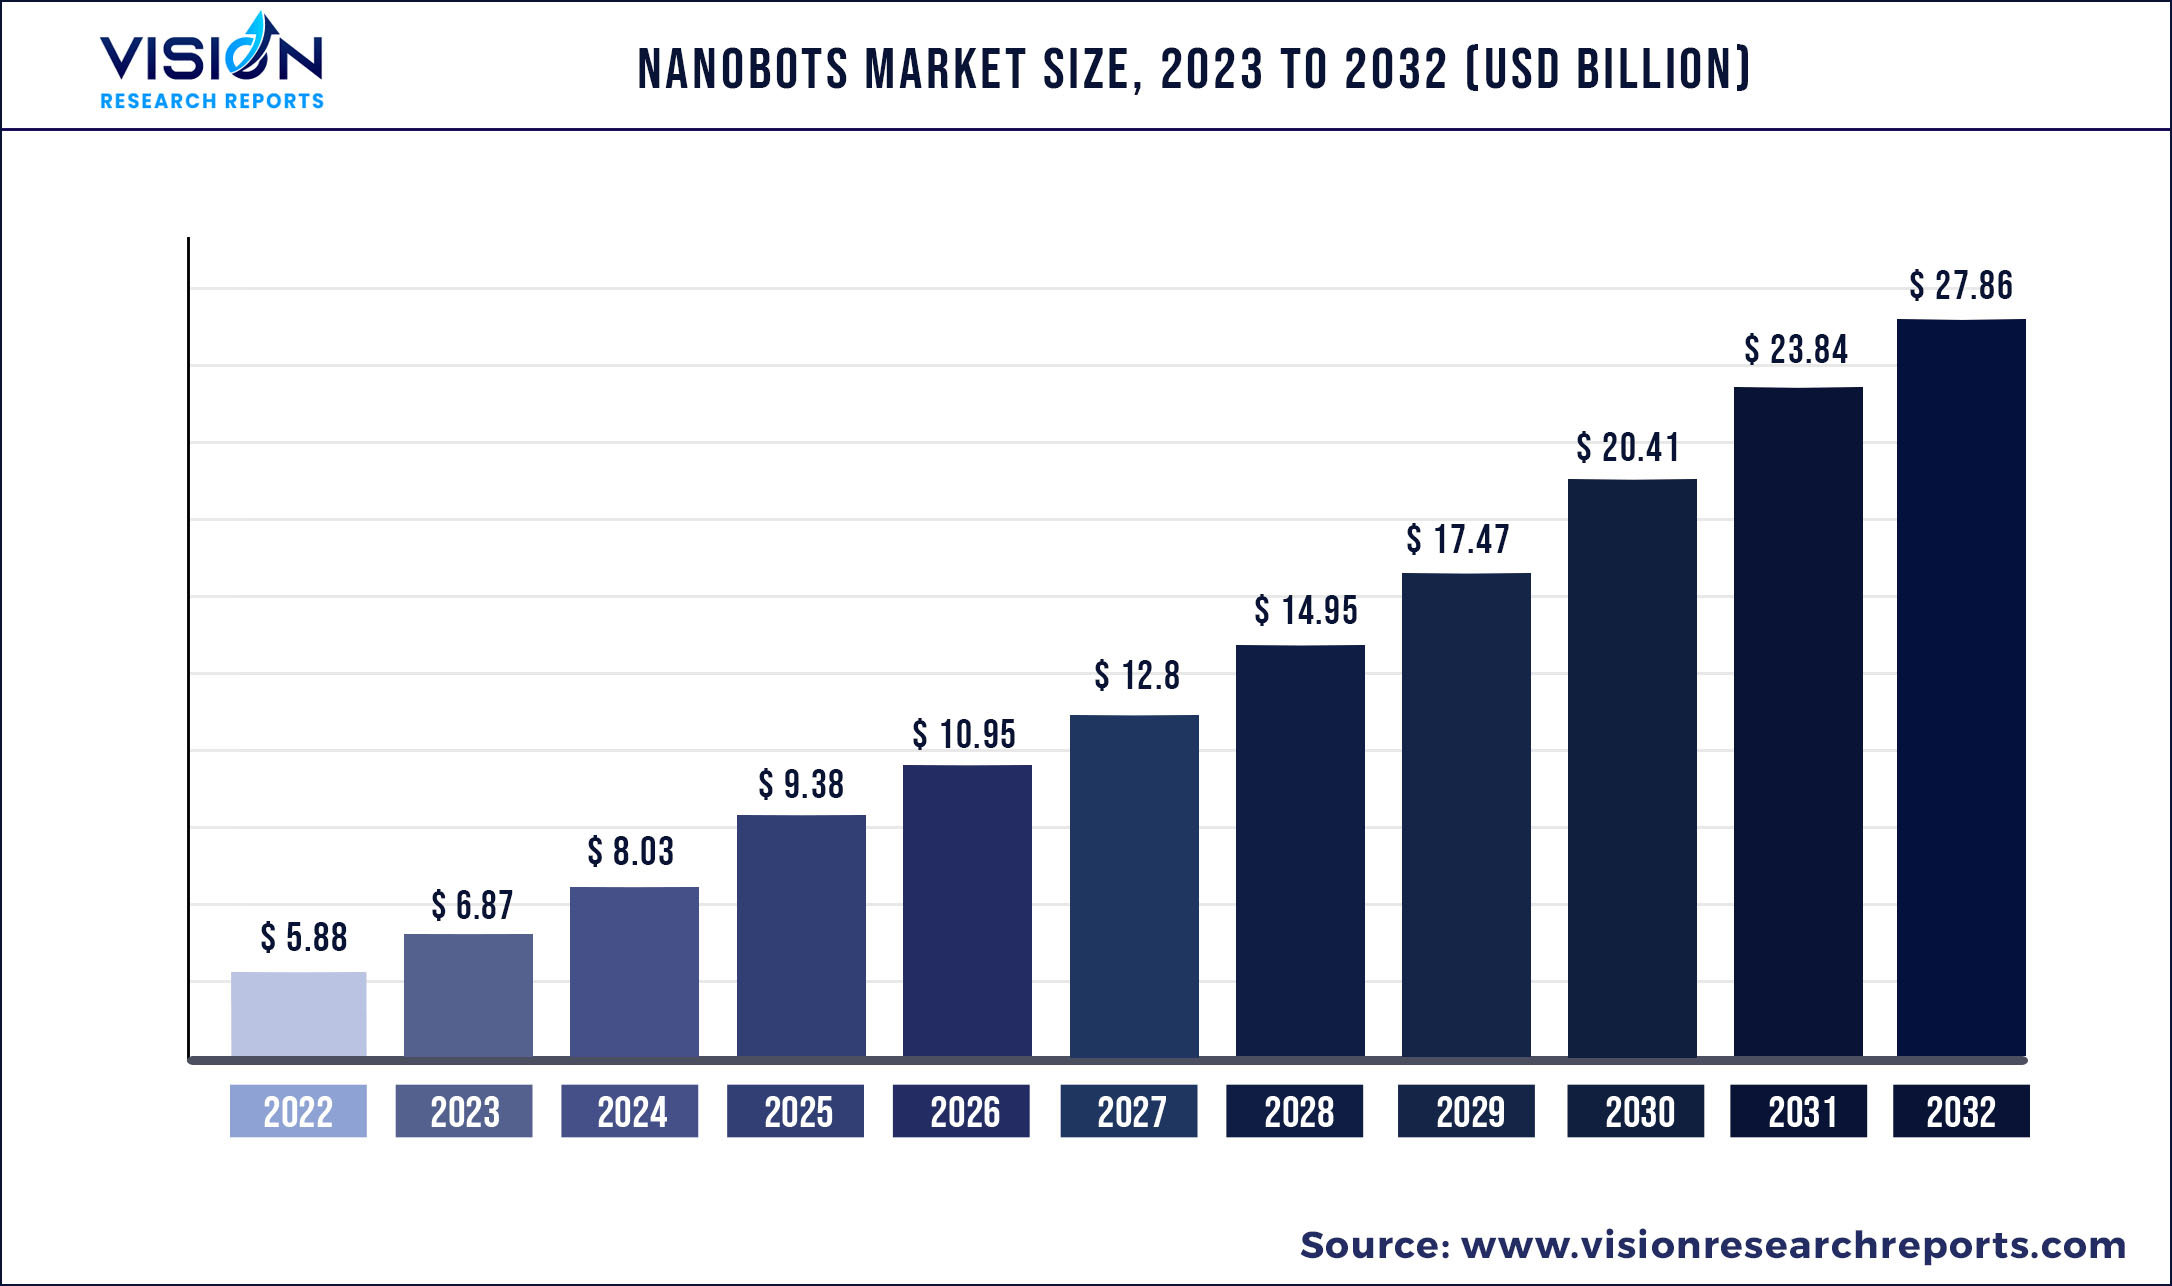 Nanobots Market Size 2023 to 2032